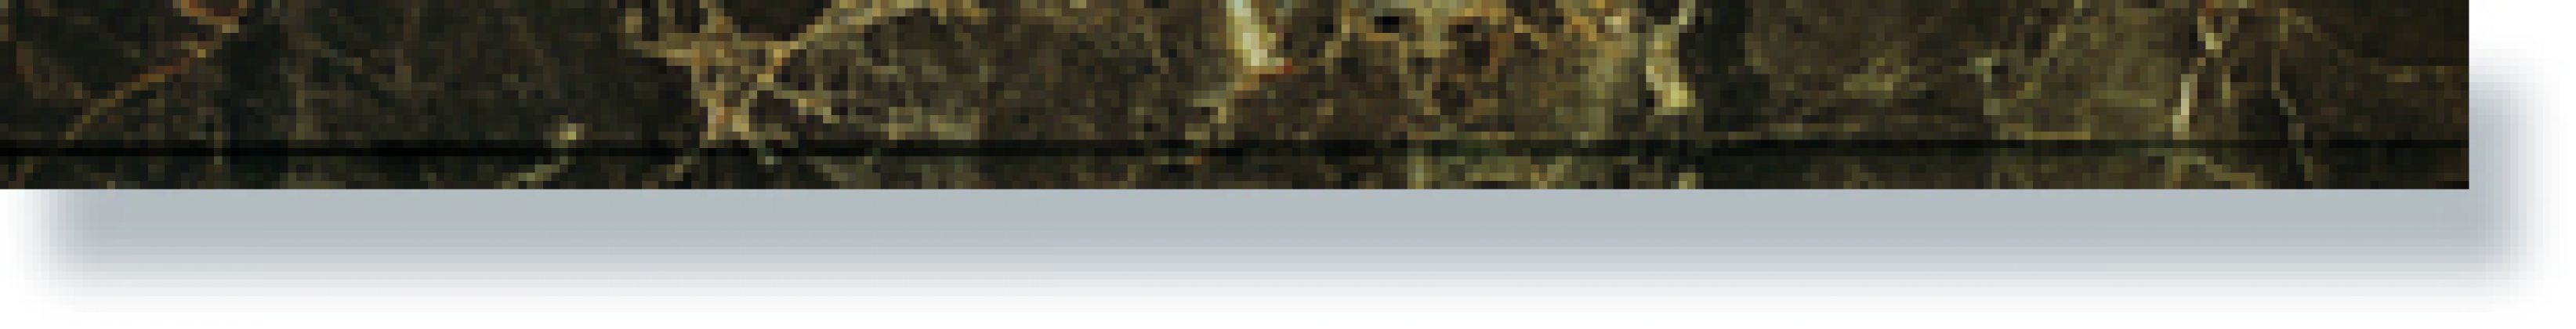 I Marmi Matita Dark Imperador 2x34 MI1825